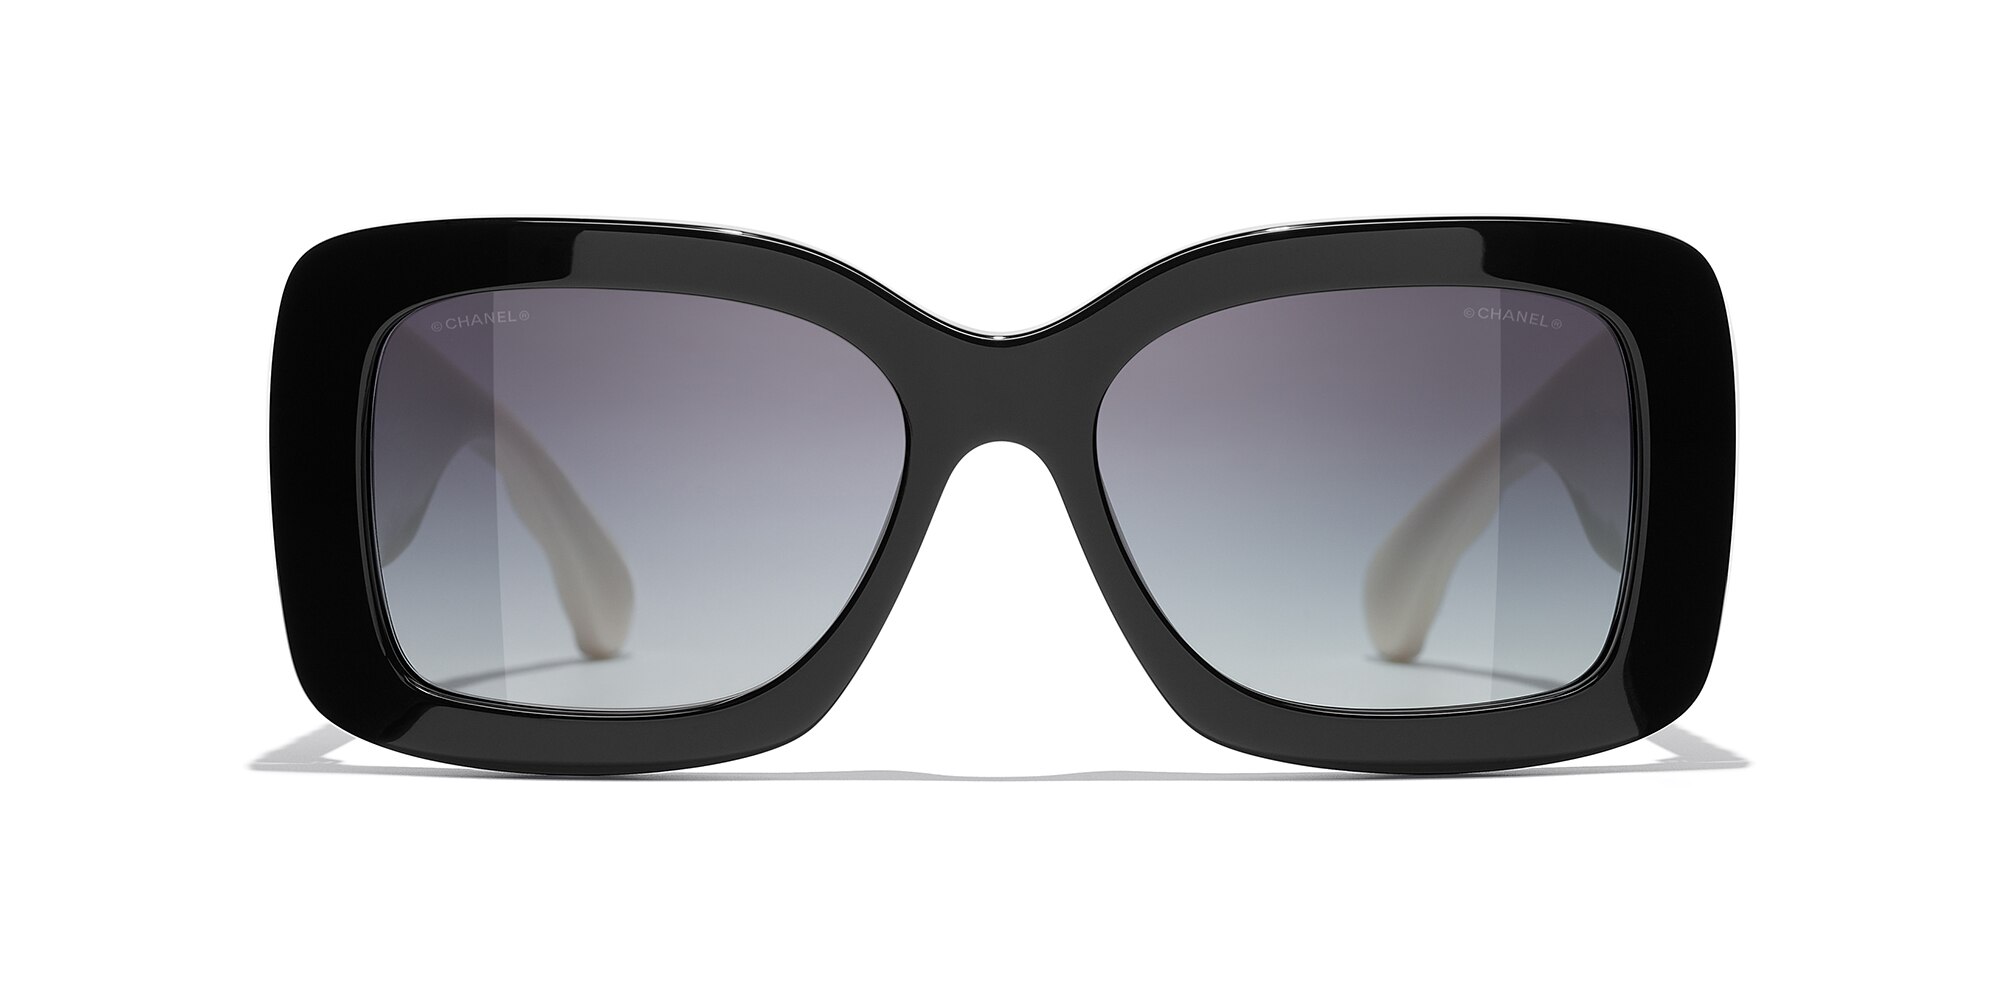 CHANEL Square sunglasses in black  gray polarized  Breuninger